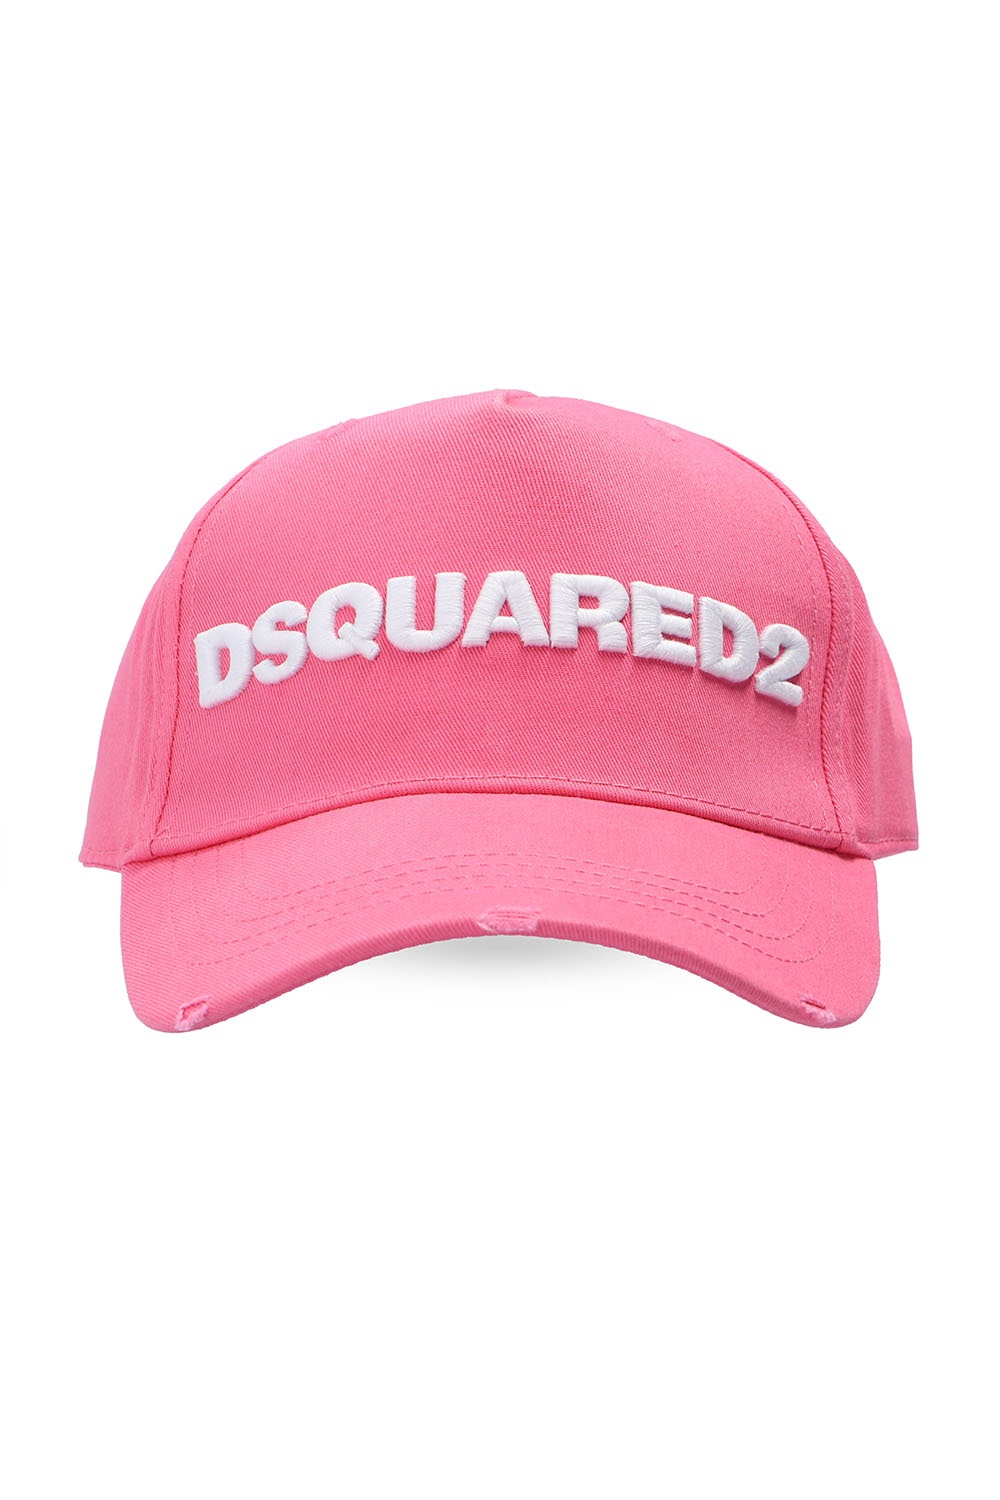 Dsquared2 hat Cappello m shoe-care office-accessories Books